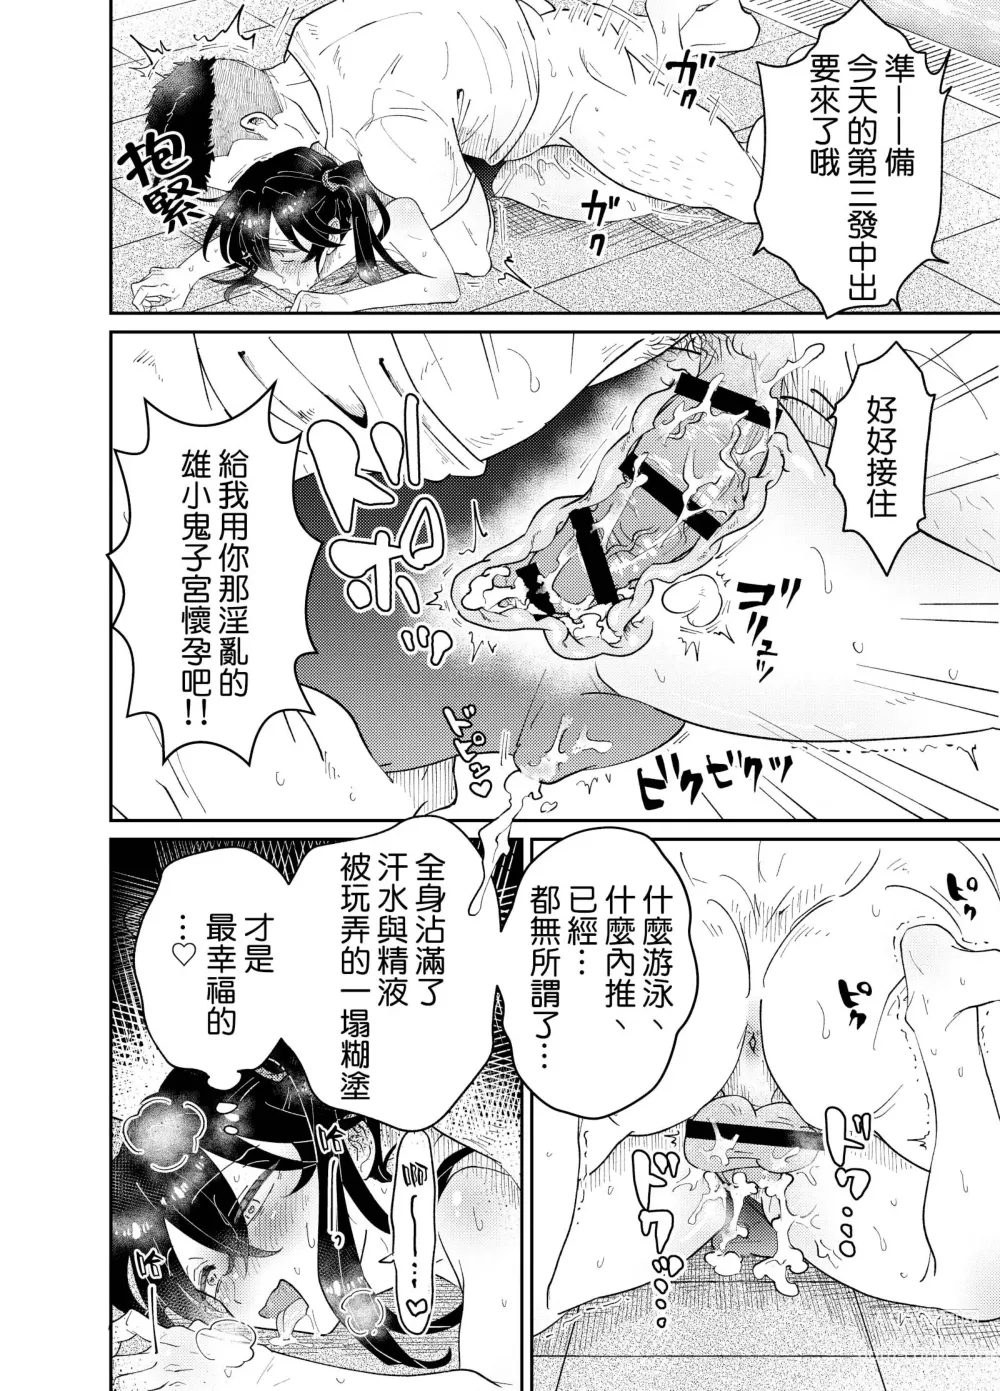 Page 25 of doujinshi 让自以为是的学生穿上死库水进行单独性指导!